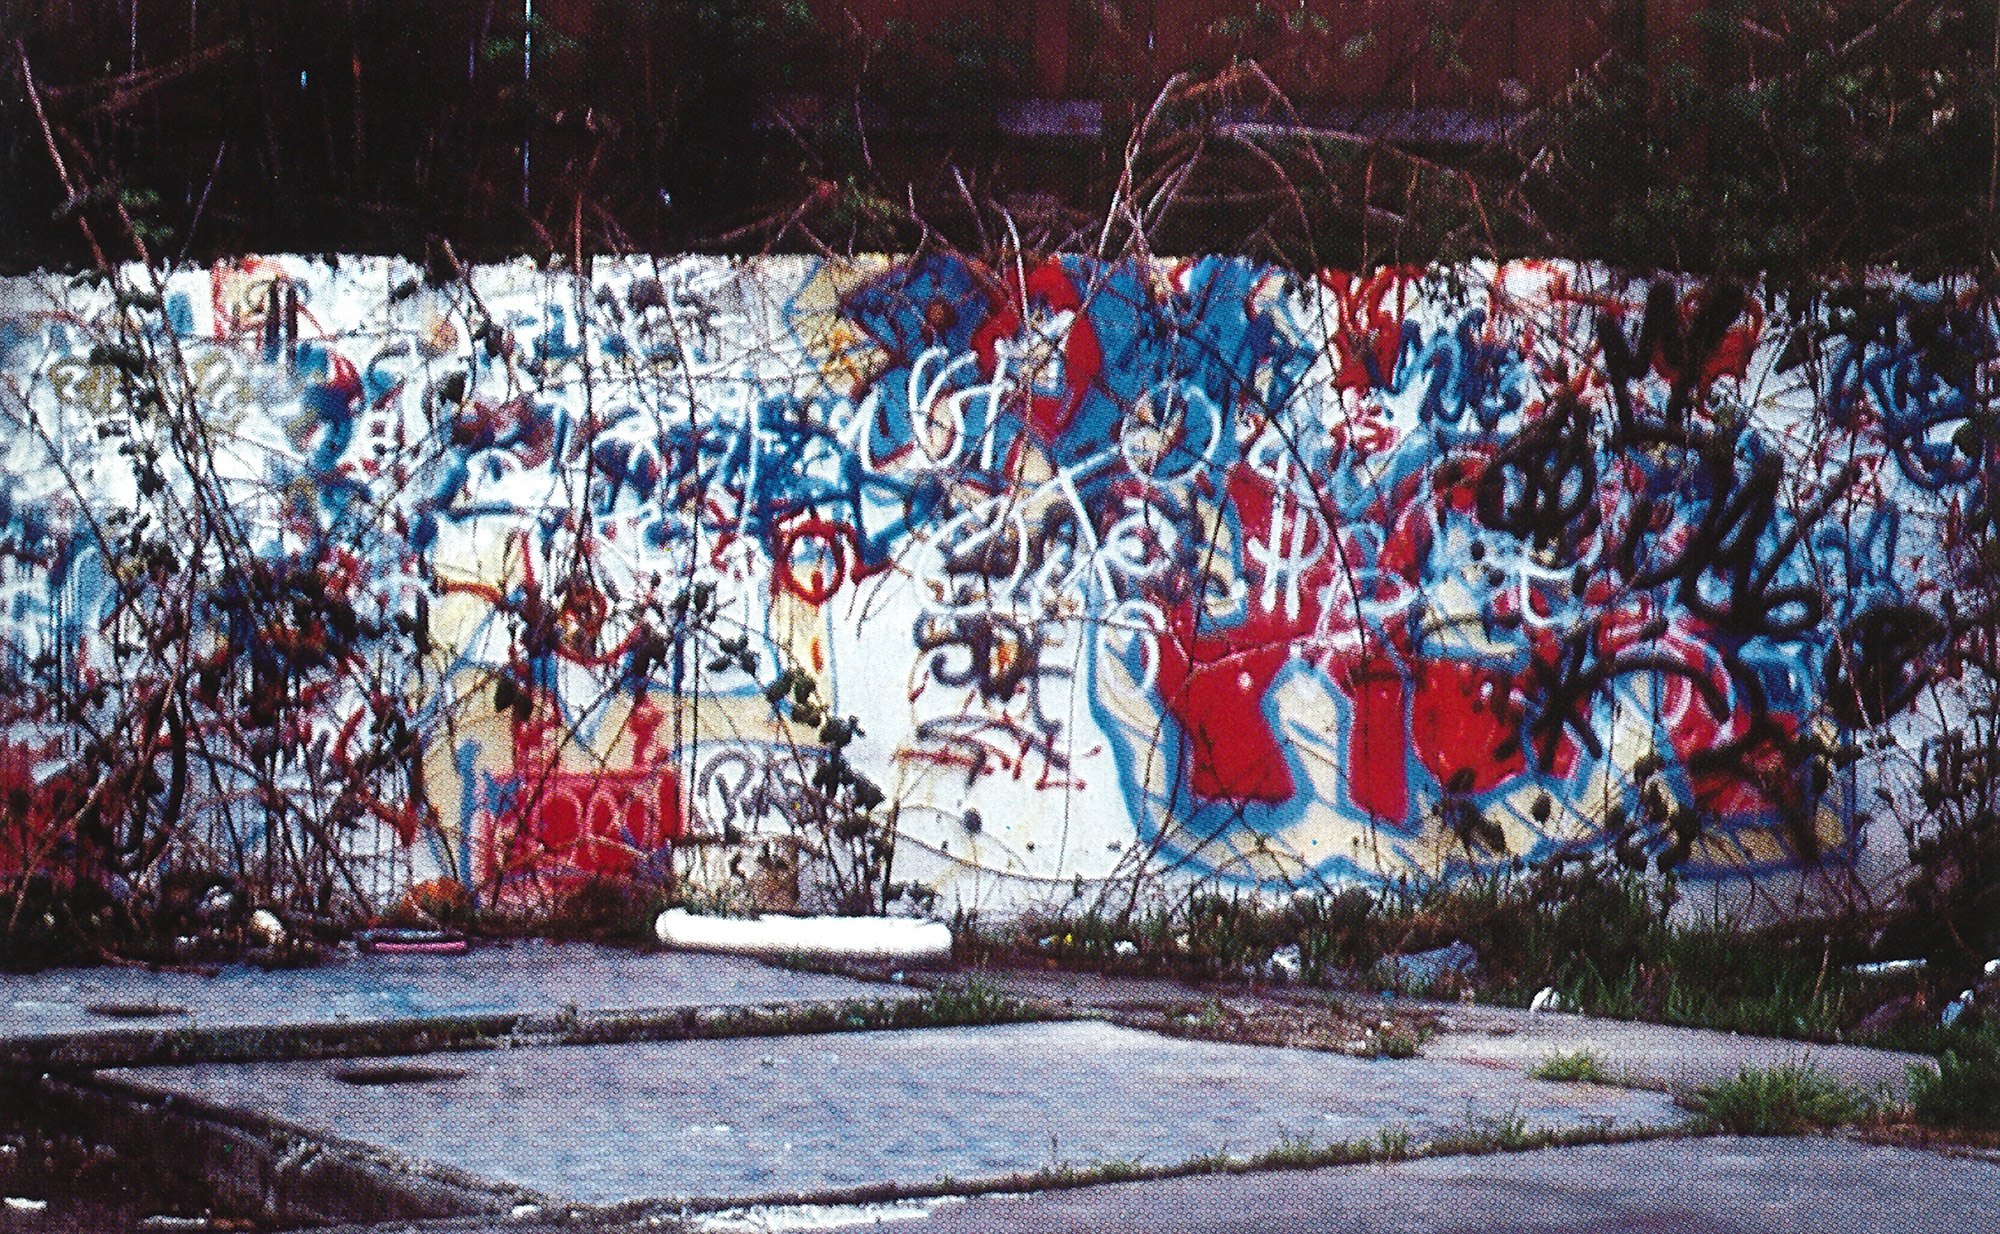 reasons why graffiti is vandalism